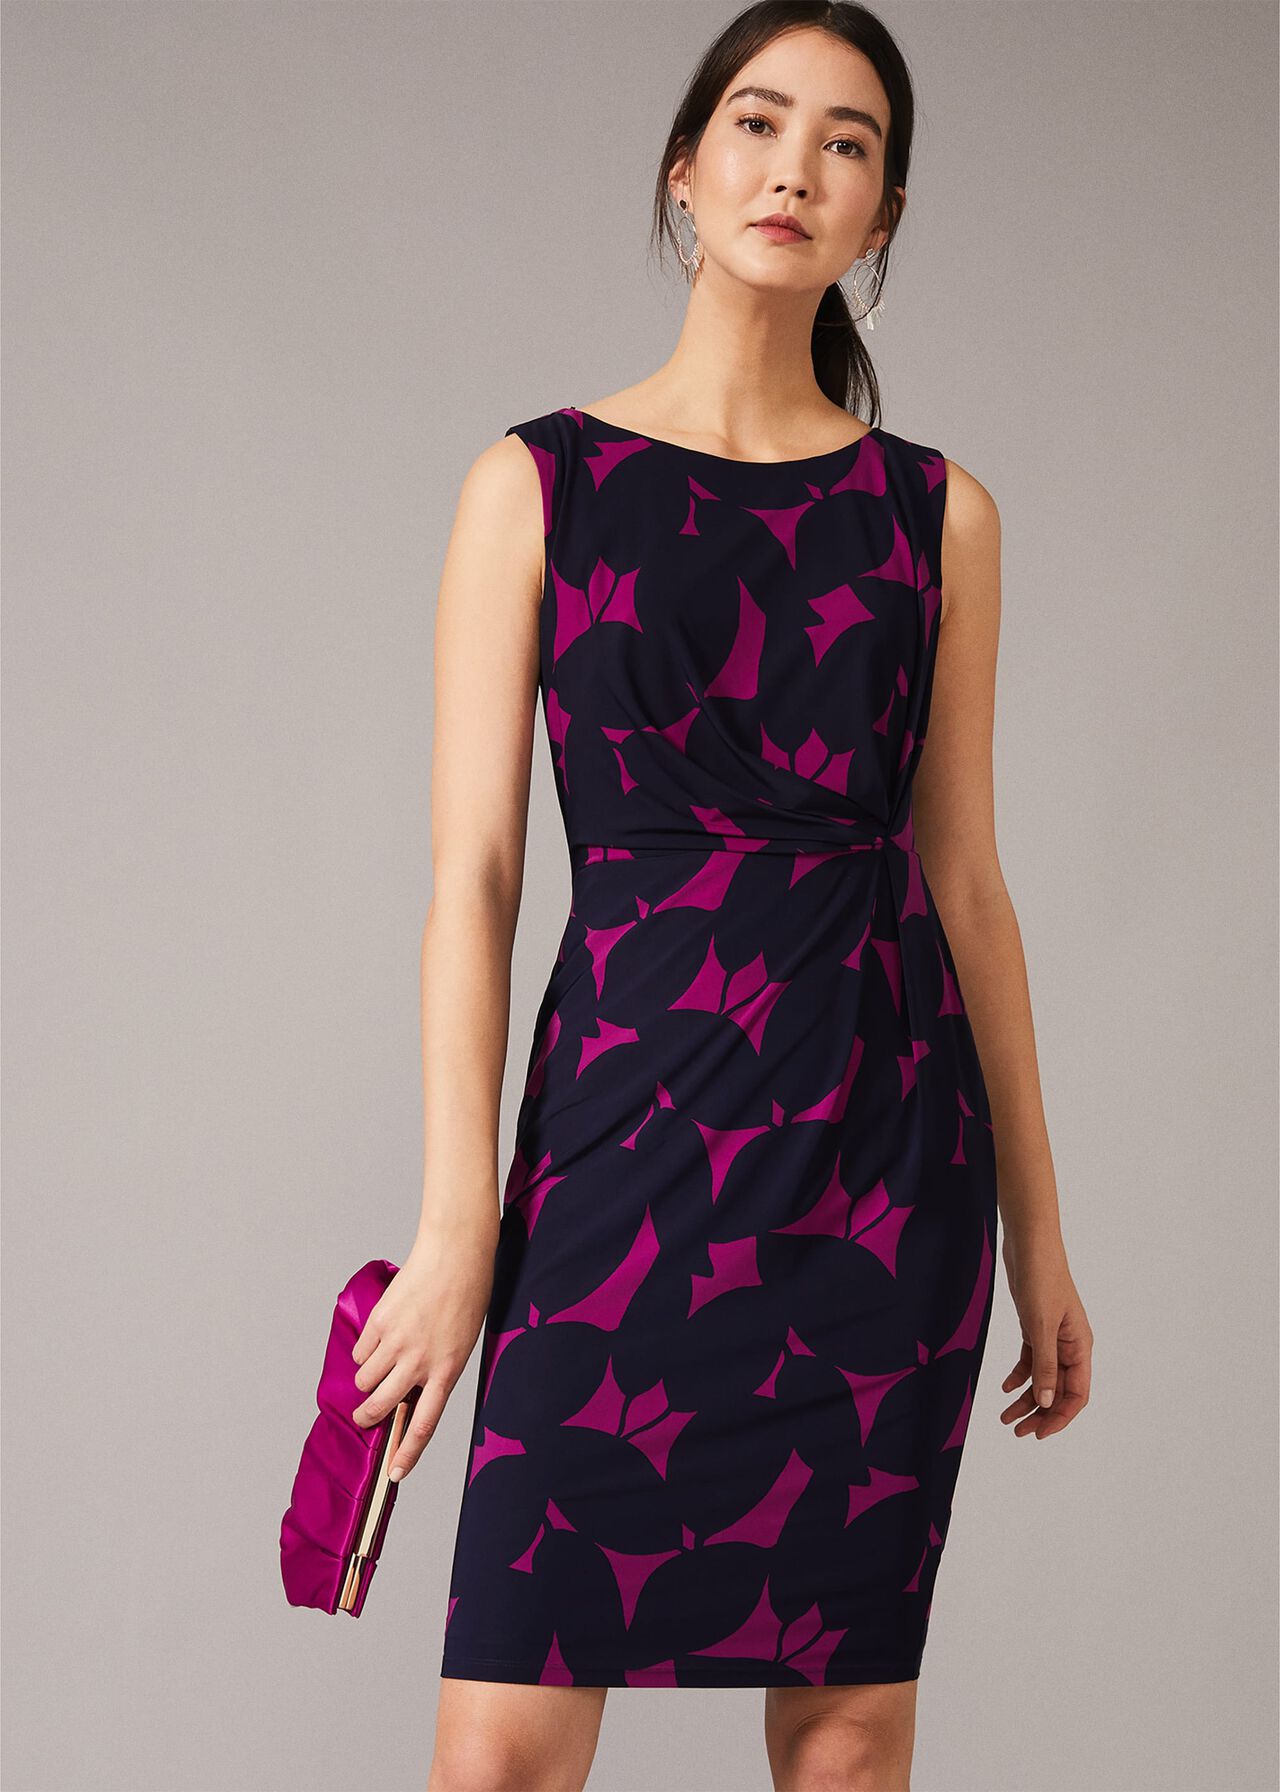 Giselle Leaf Print Dress